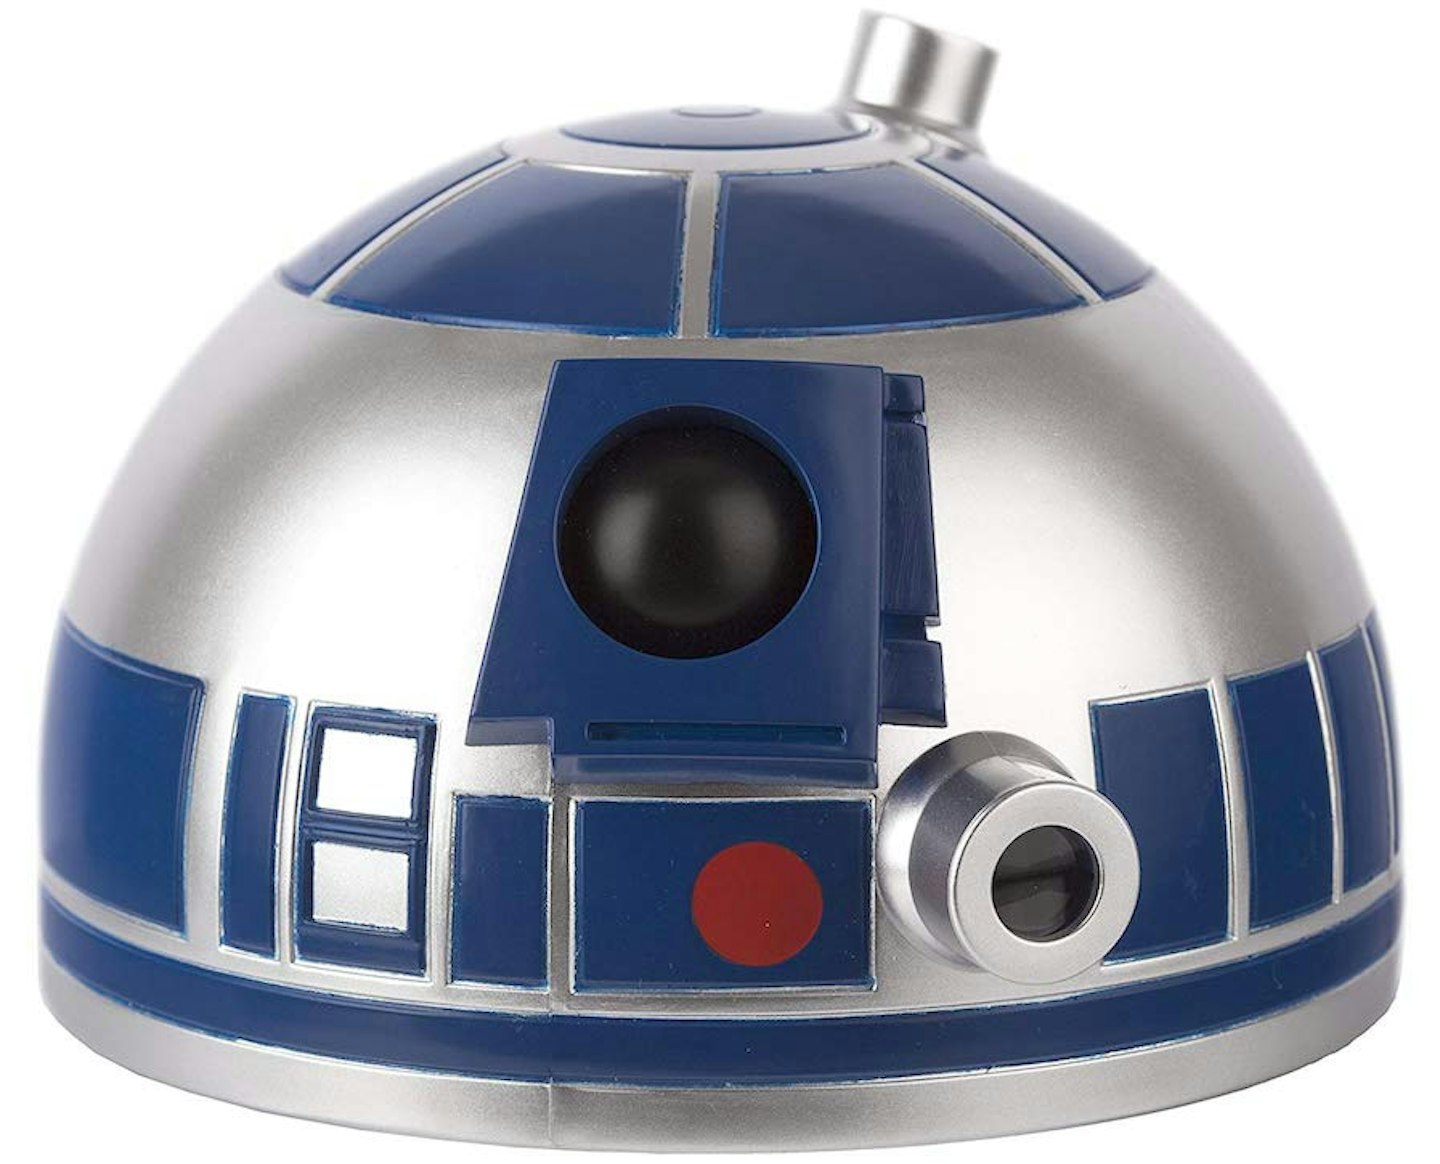 Disney Star Wars R2-D2 Measuring Cups - 9 Measuring Units